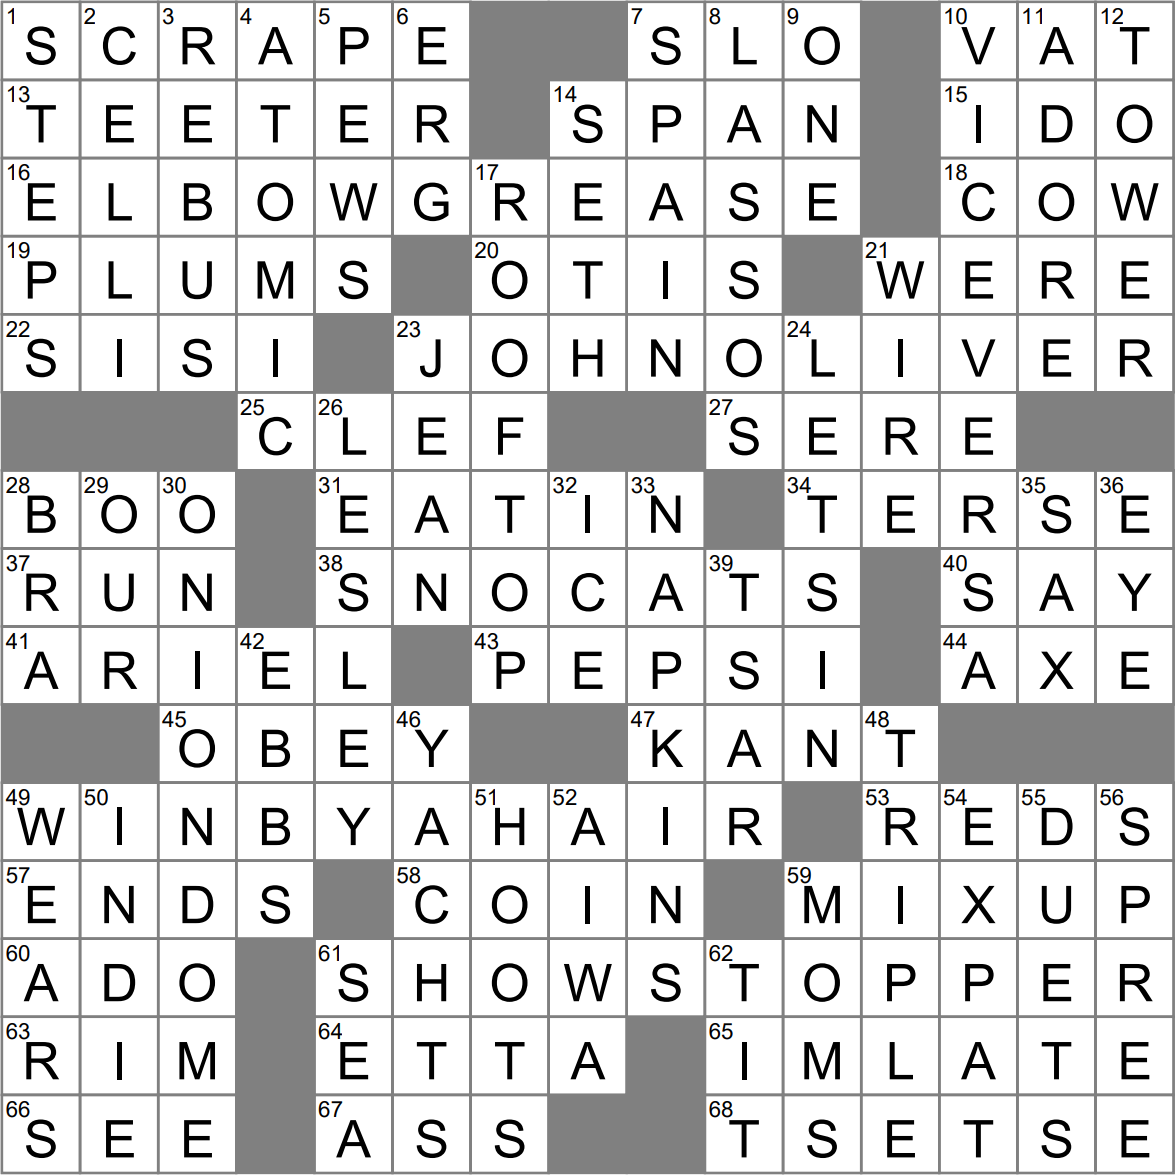 LA Times Crossword 3 Apr 23 Monday LAXCrossword com